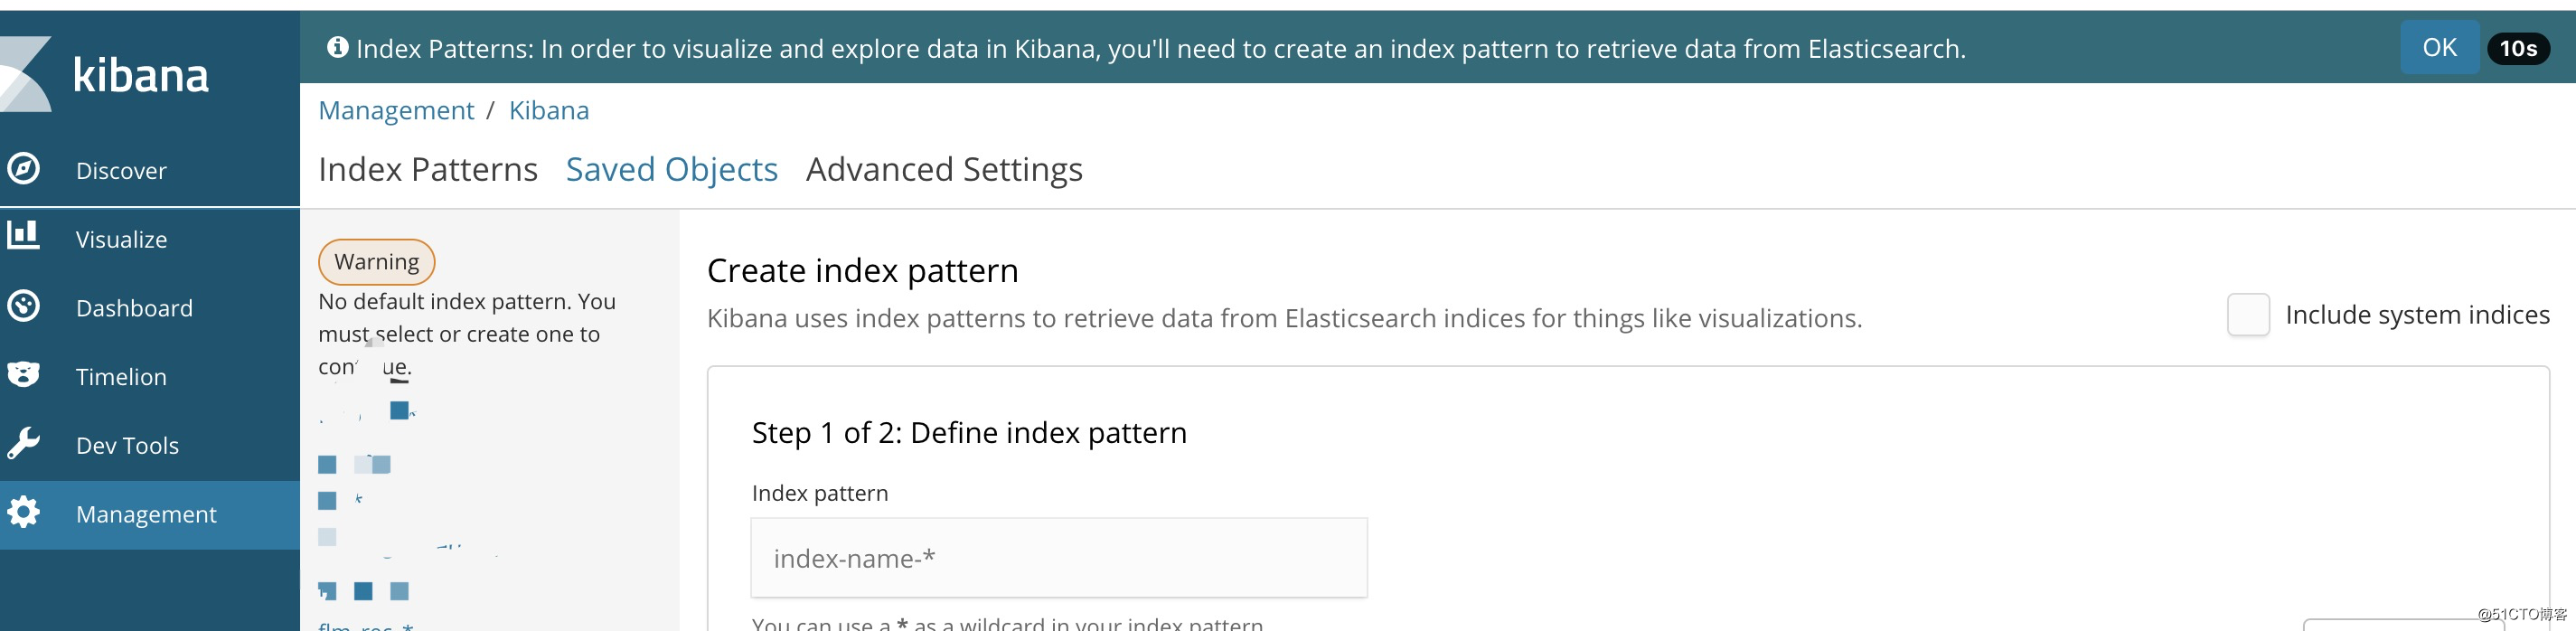 Solution Warning No default index pattern of kibana appear